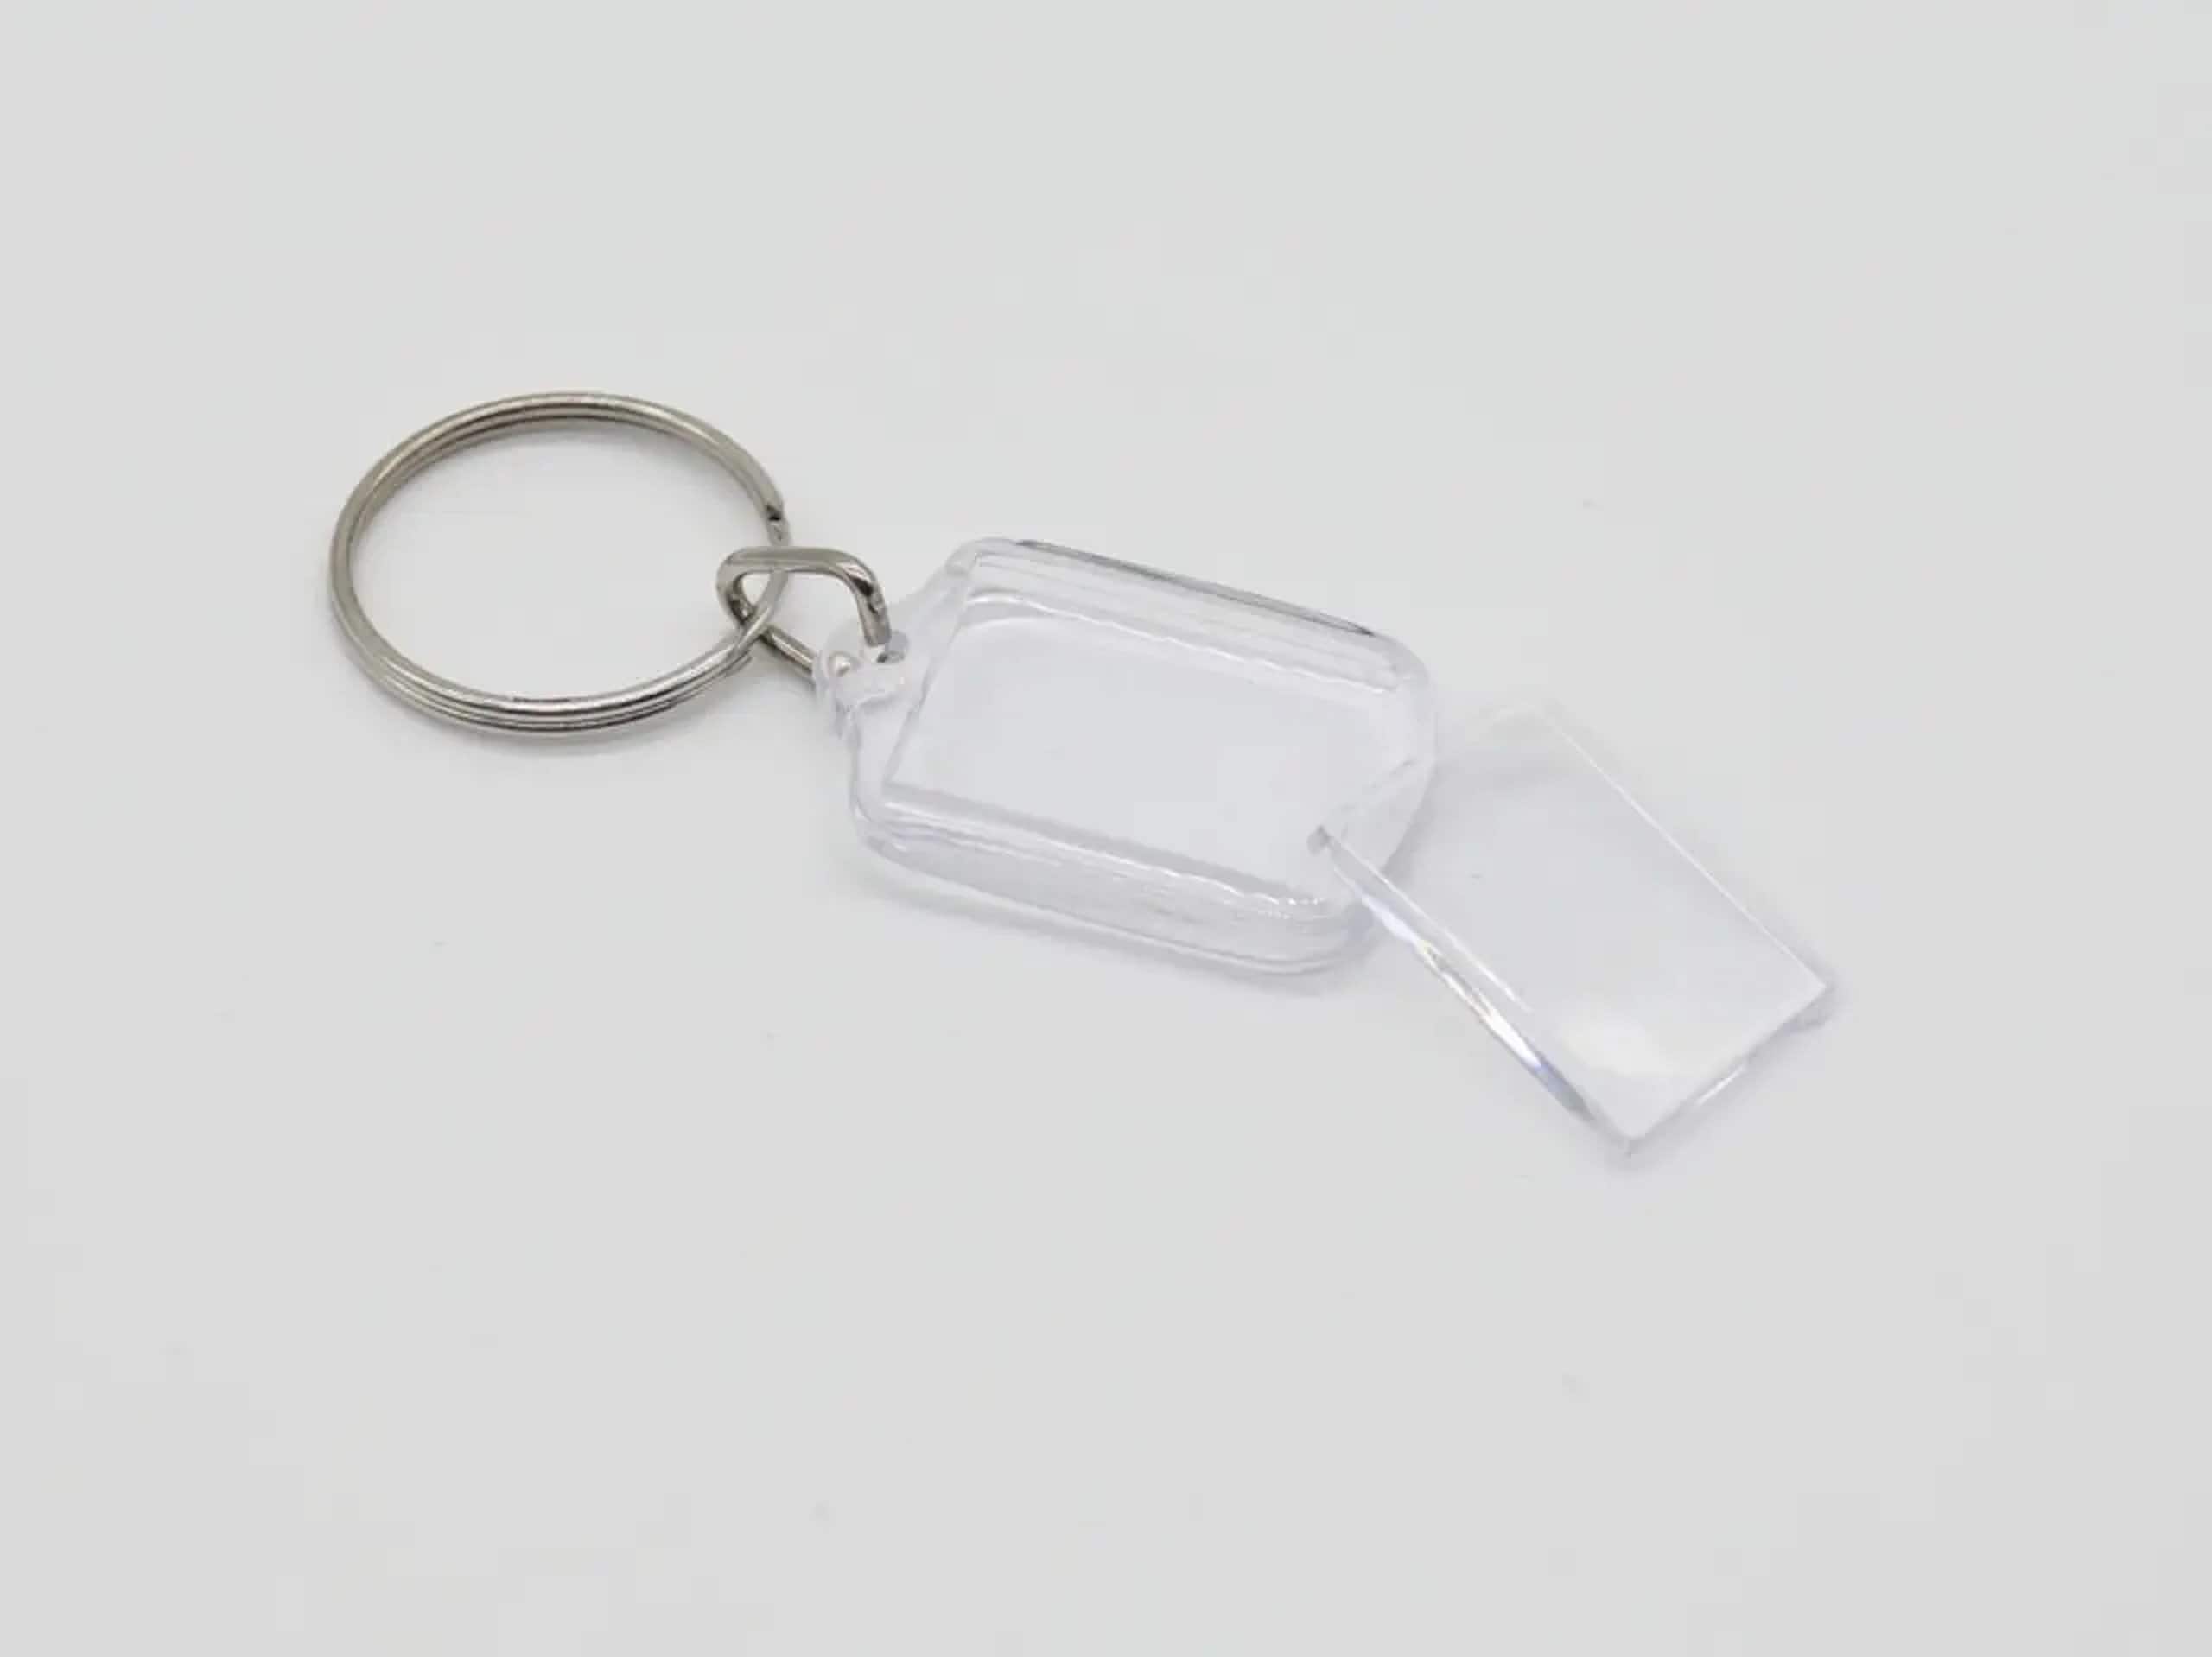 shynek Acrylic Blank Keychains, Clear Keychain Blanks for Vinyl